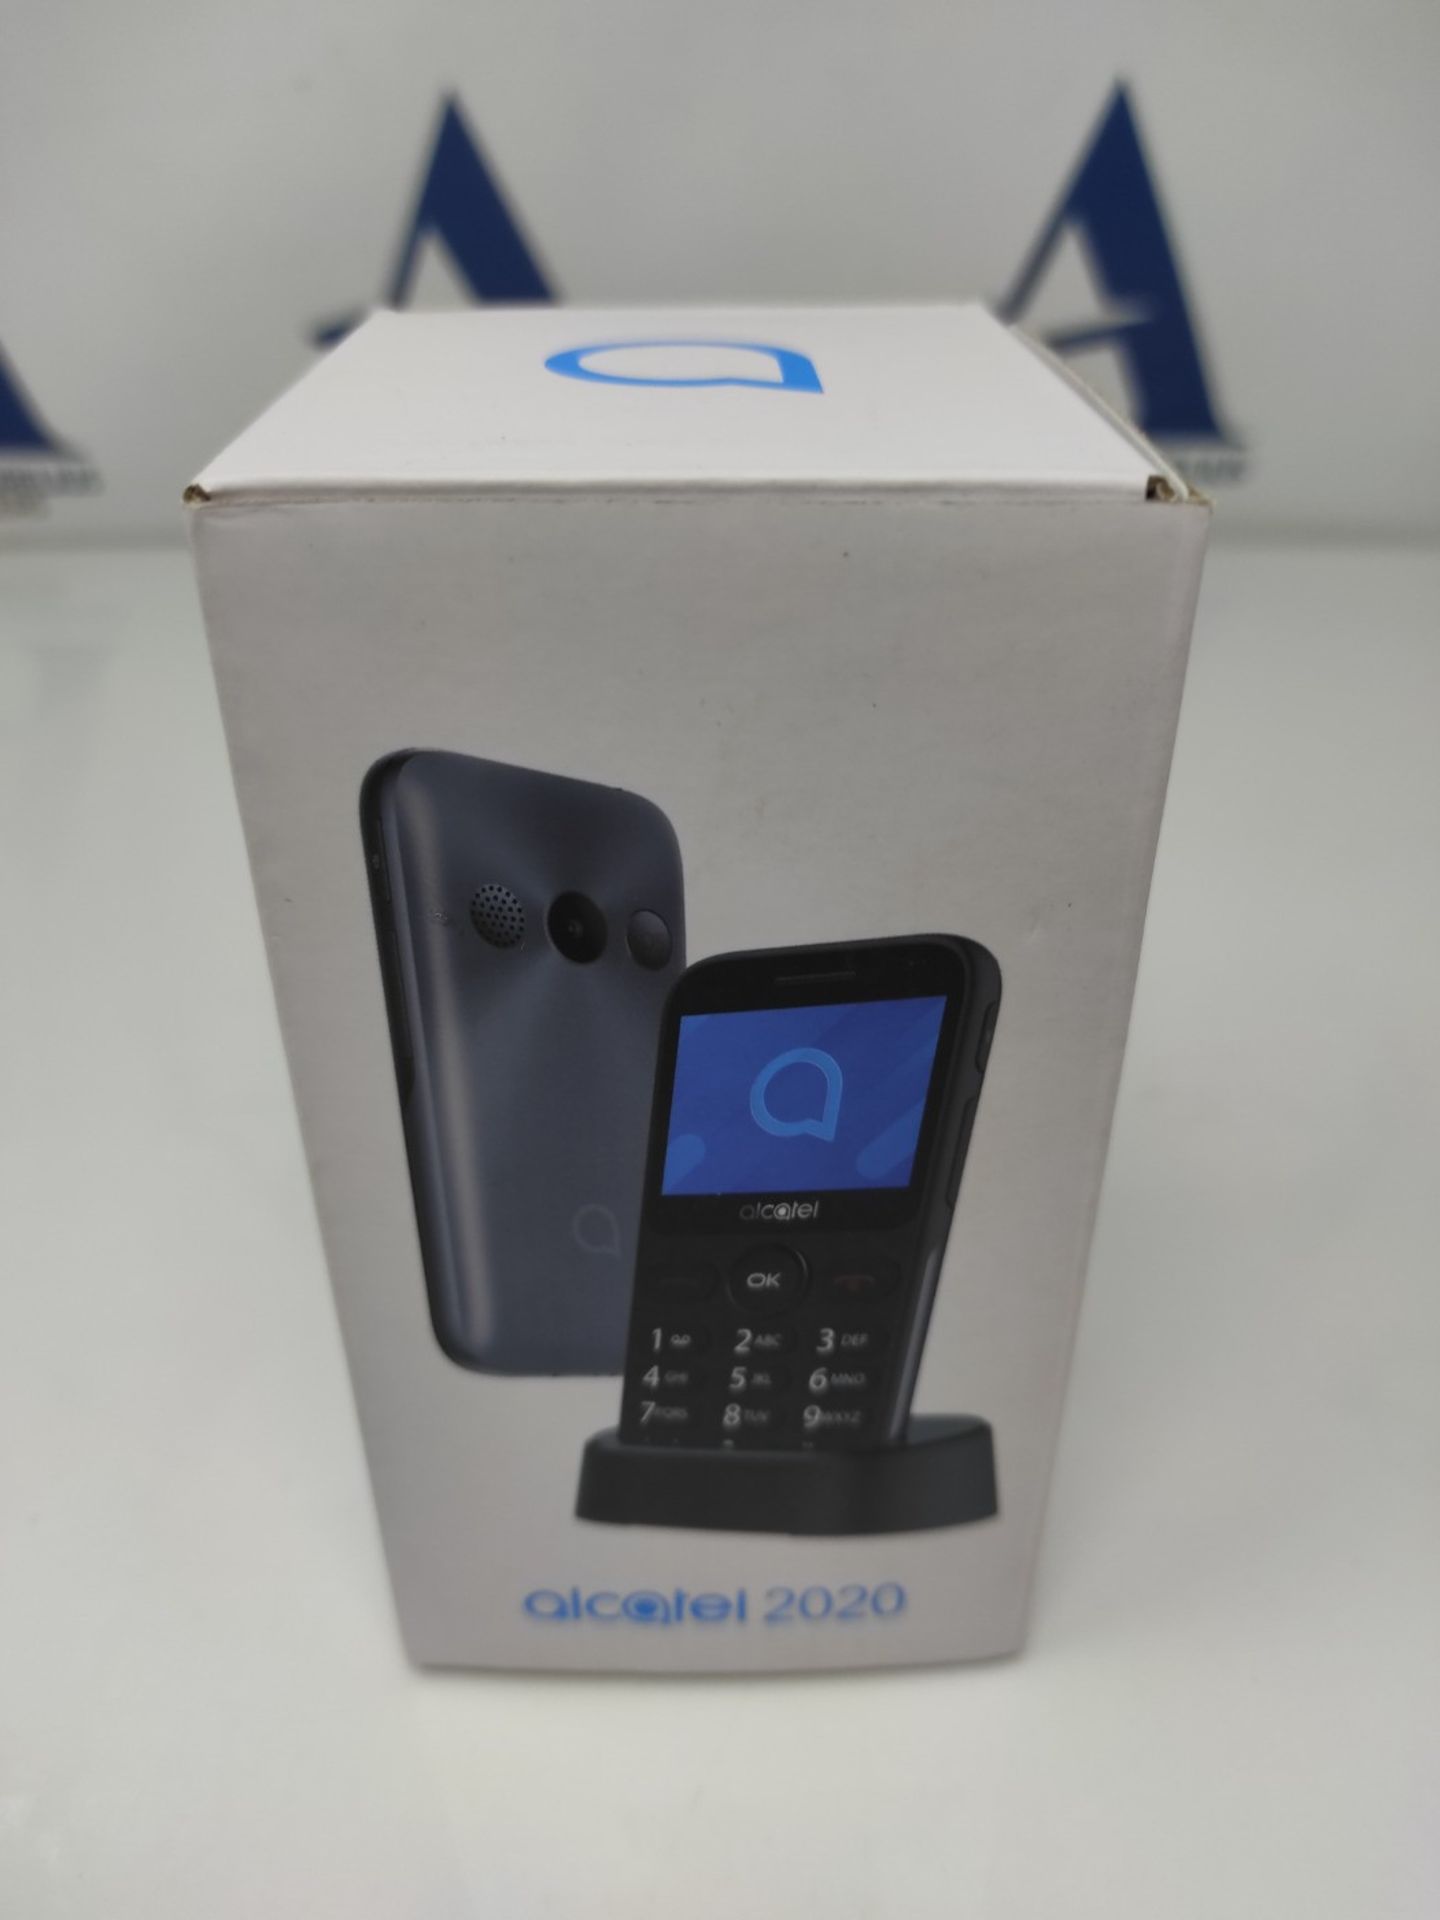 Alcatel 2020X - Mobile Phone, 2.4" Color Display, Large Buttons, SOS Button, Charging - Bild 2 aus 3